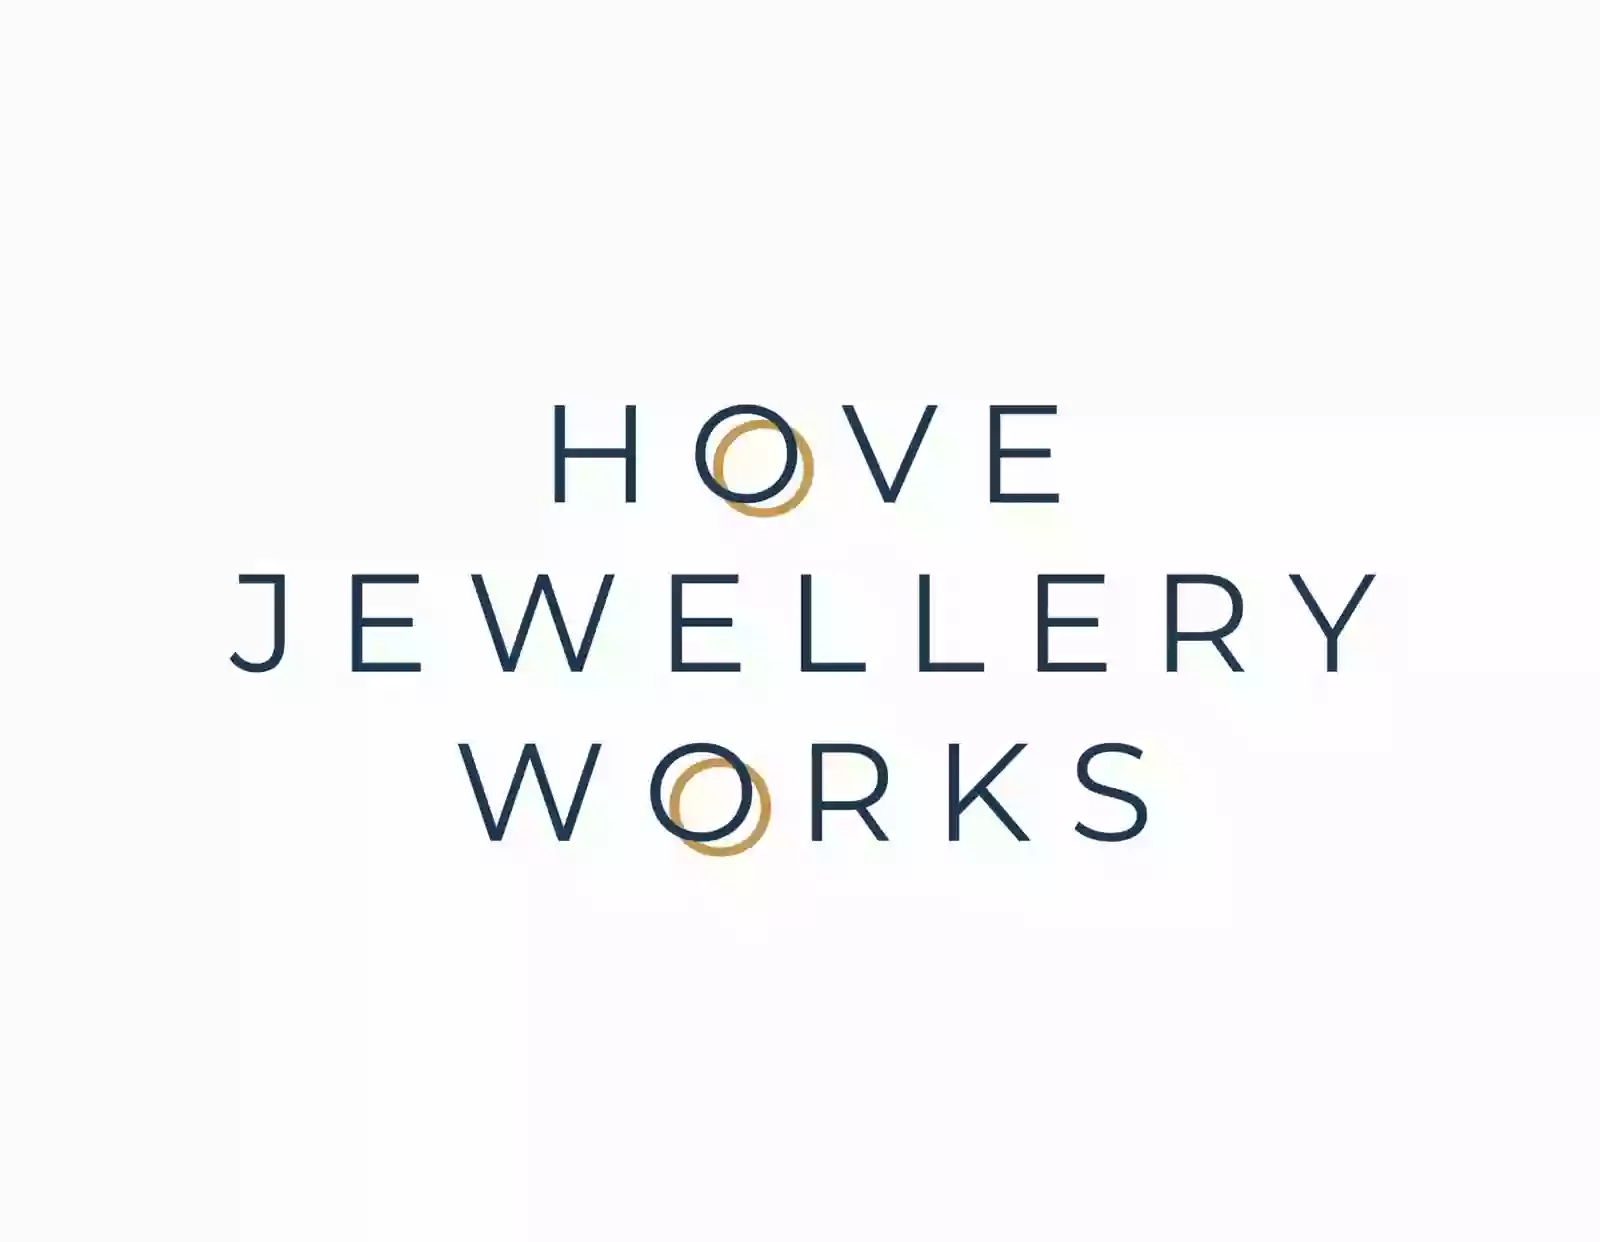 Hove Jewellery Works